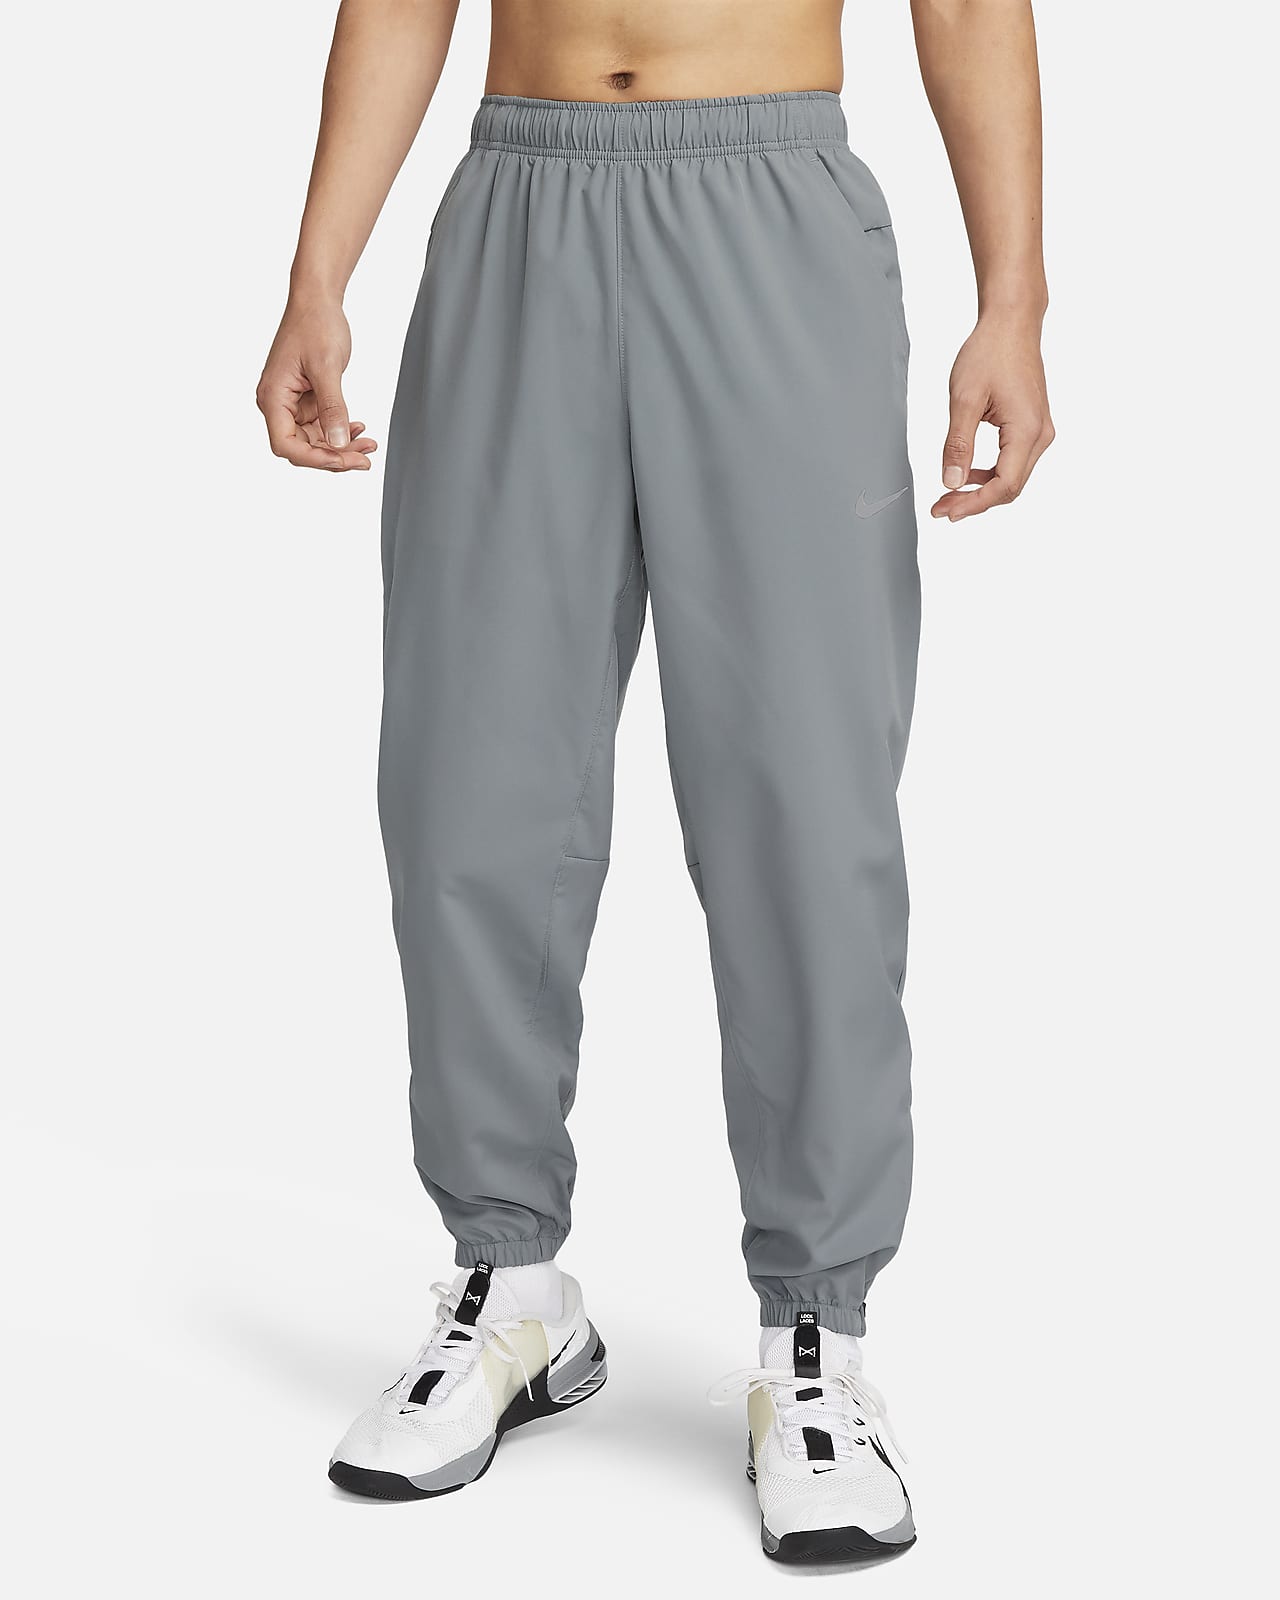 Nike Pants for Men